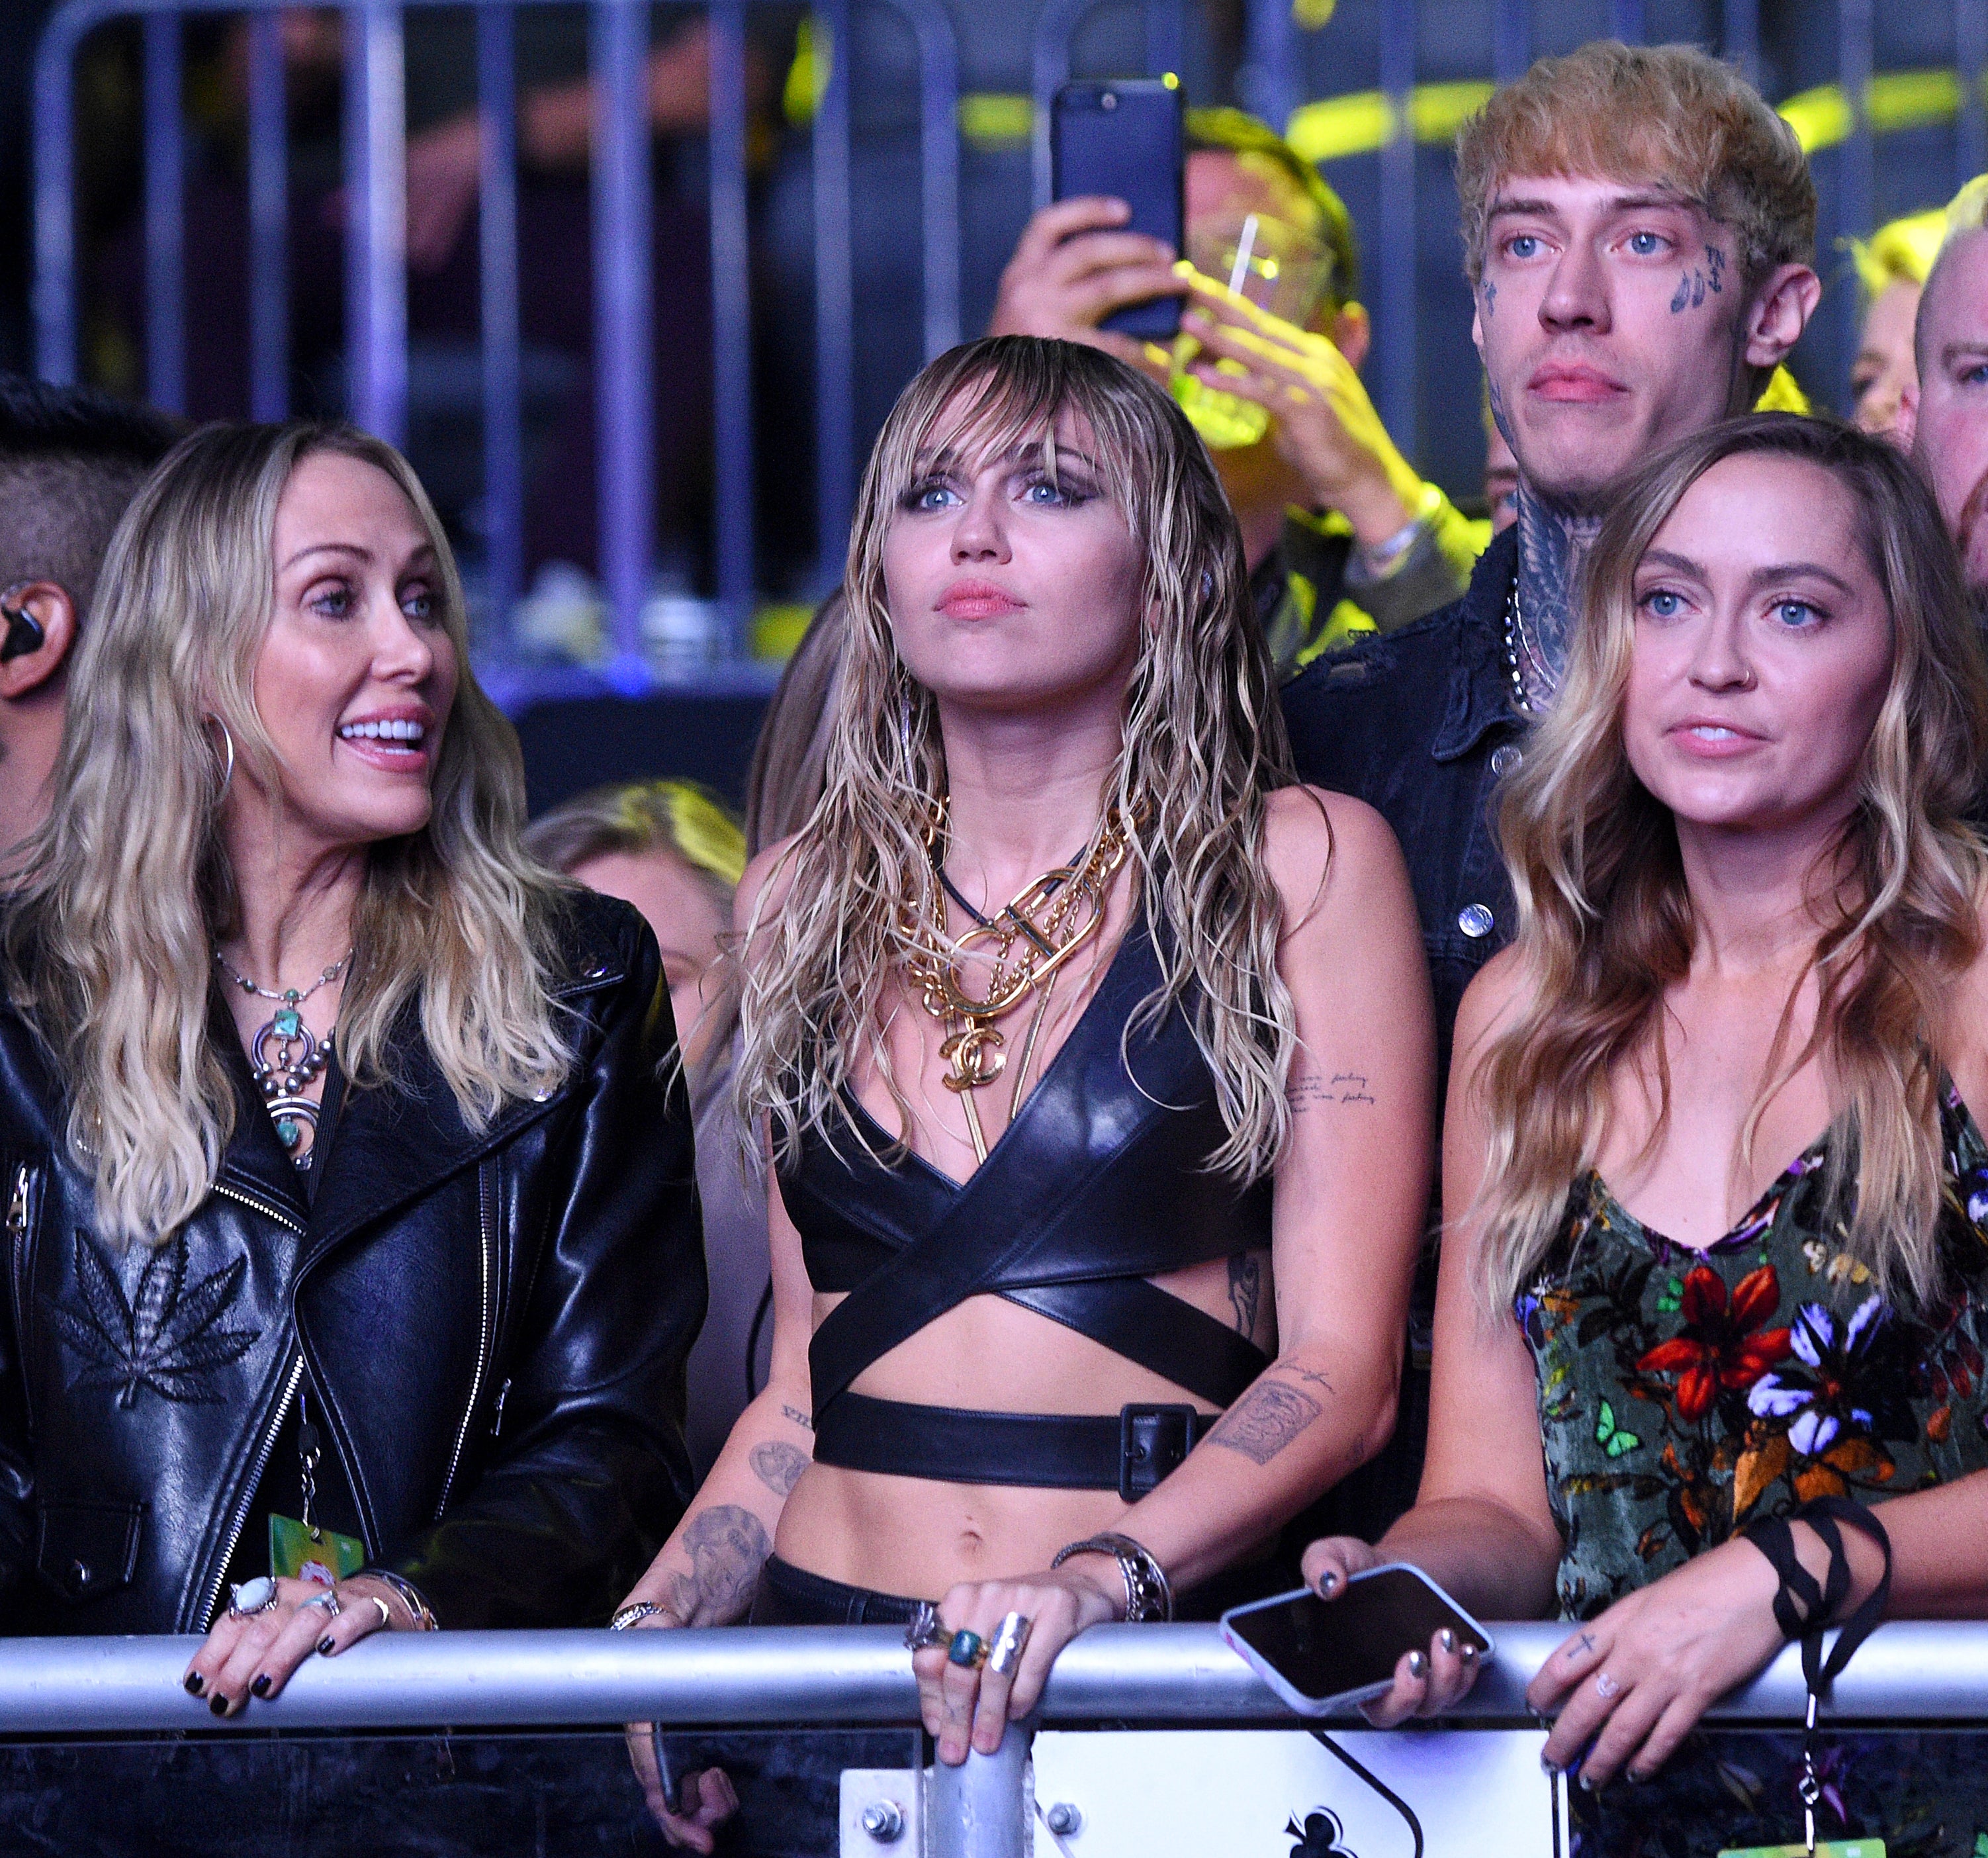 Trish, Miley, Trace, and Brandi